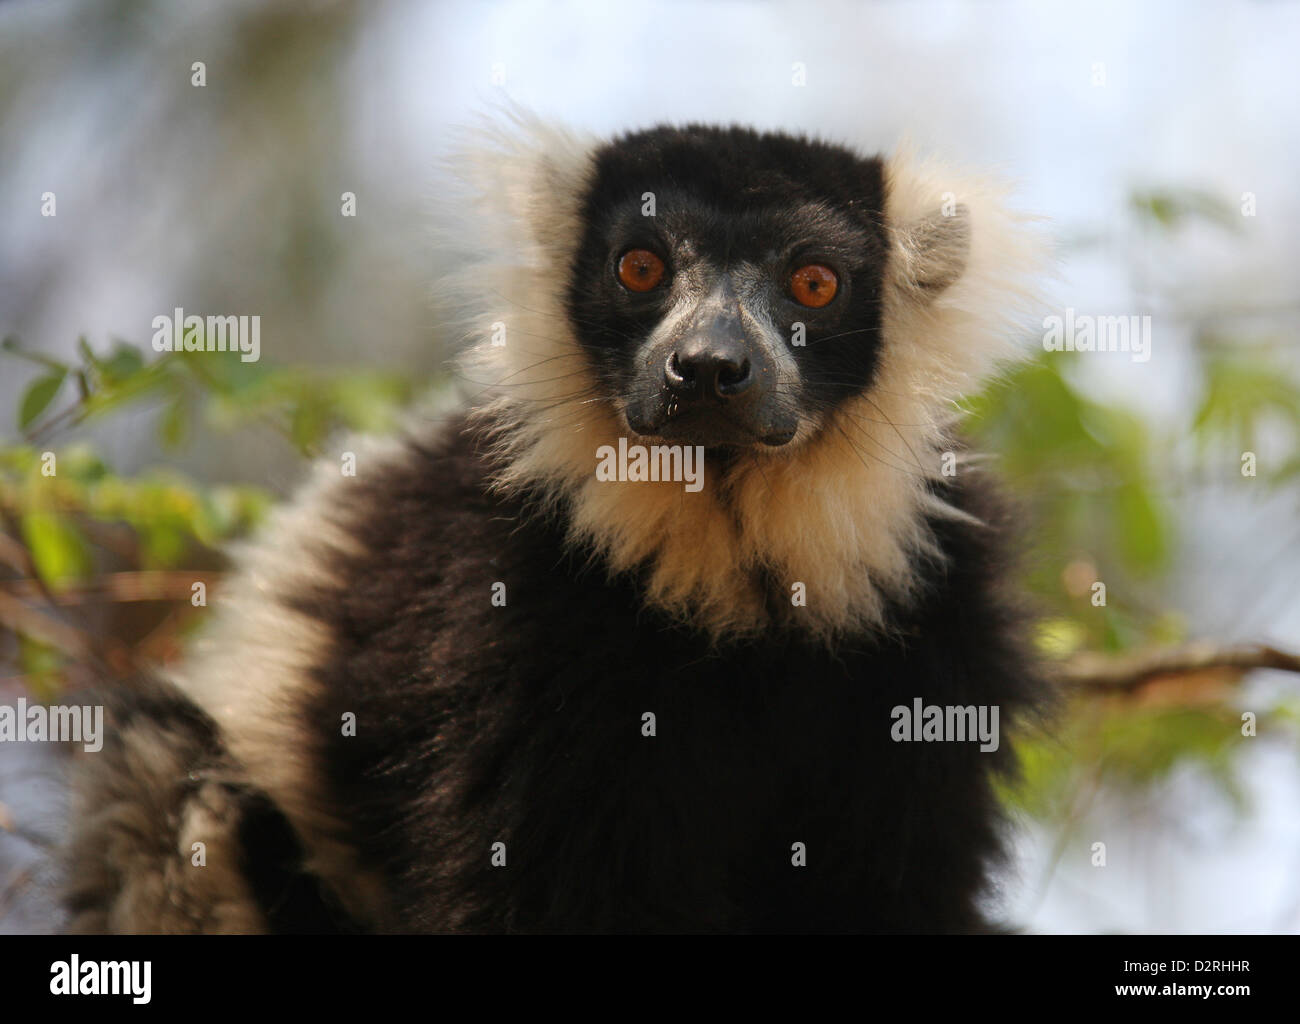 Schwarz und weiß Ruffed Lemur, Varecia Variegata, Lemurinae, Lemuridae, Primaten. Madagaskar, Afrika. Stockfoto